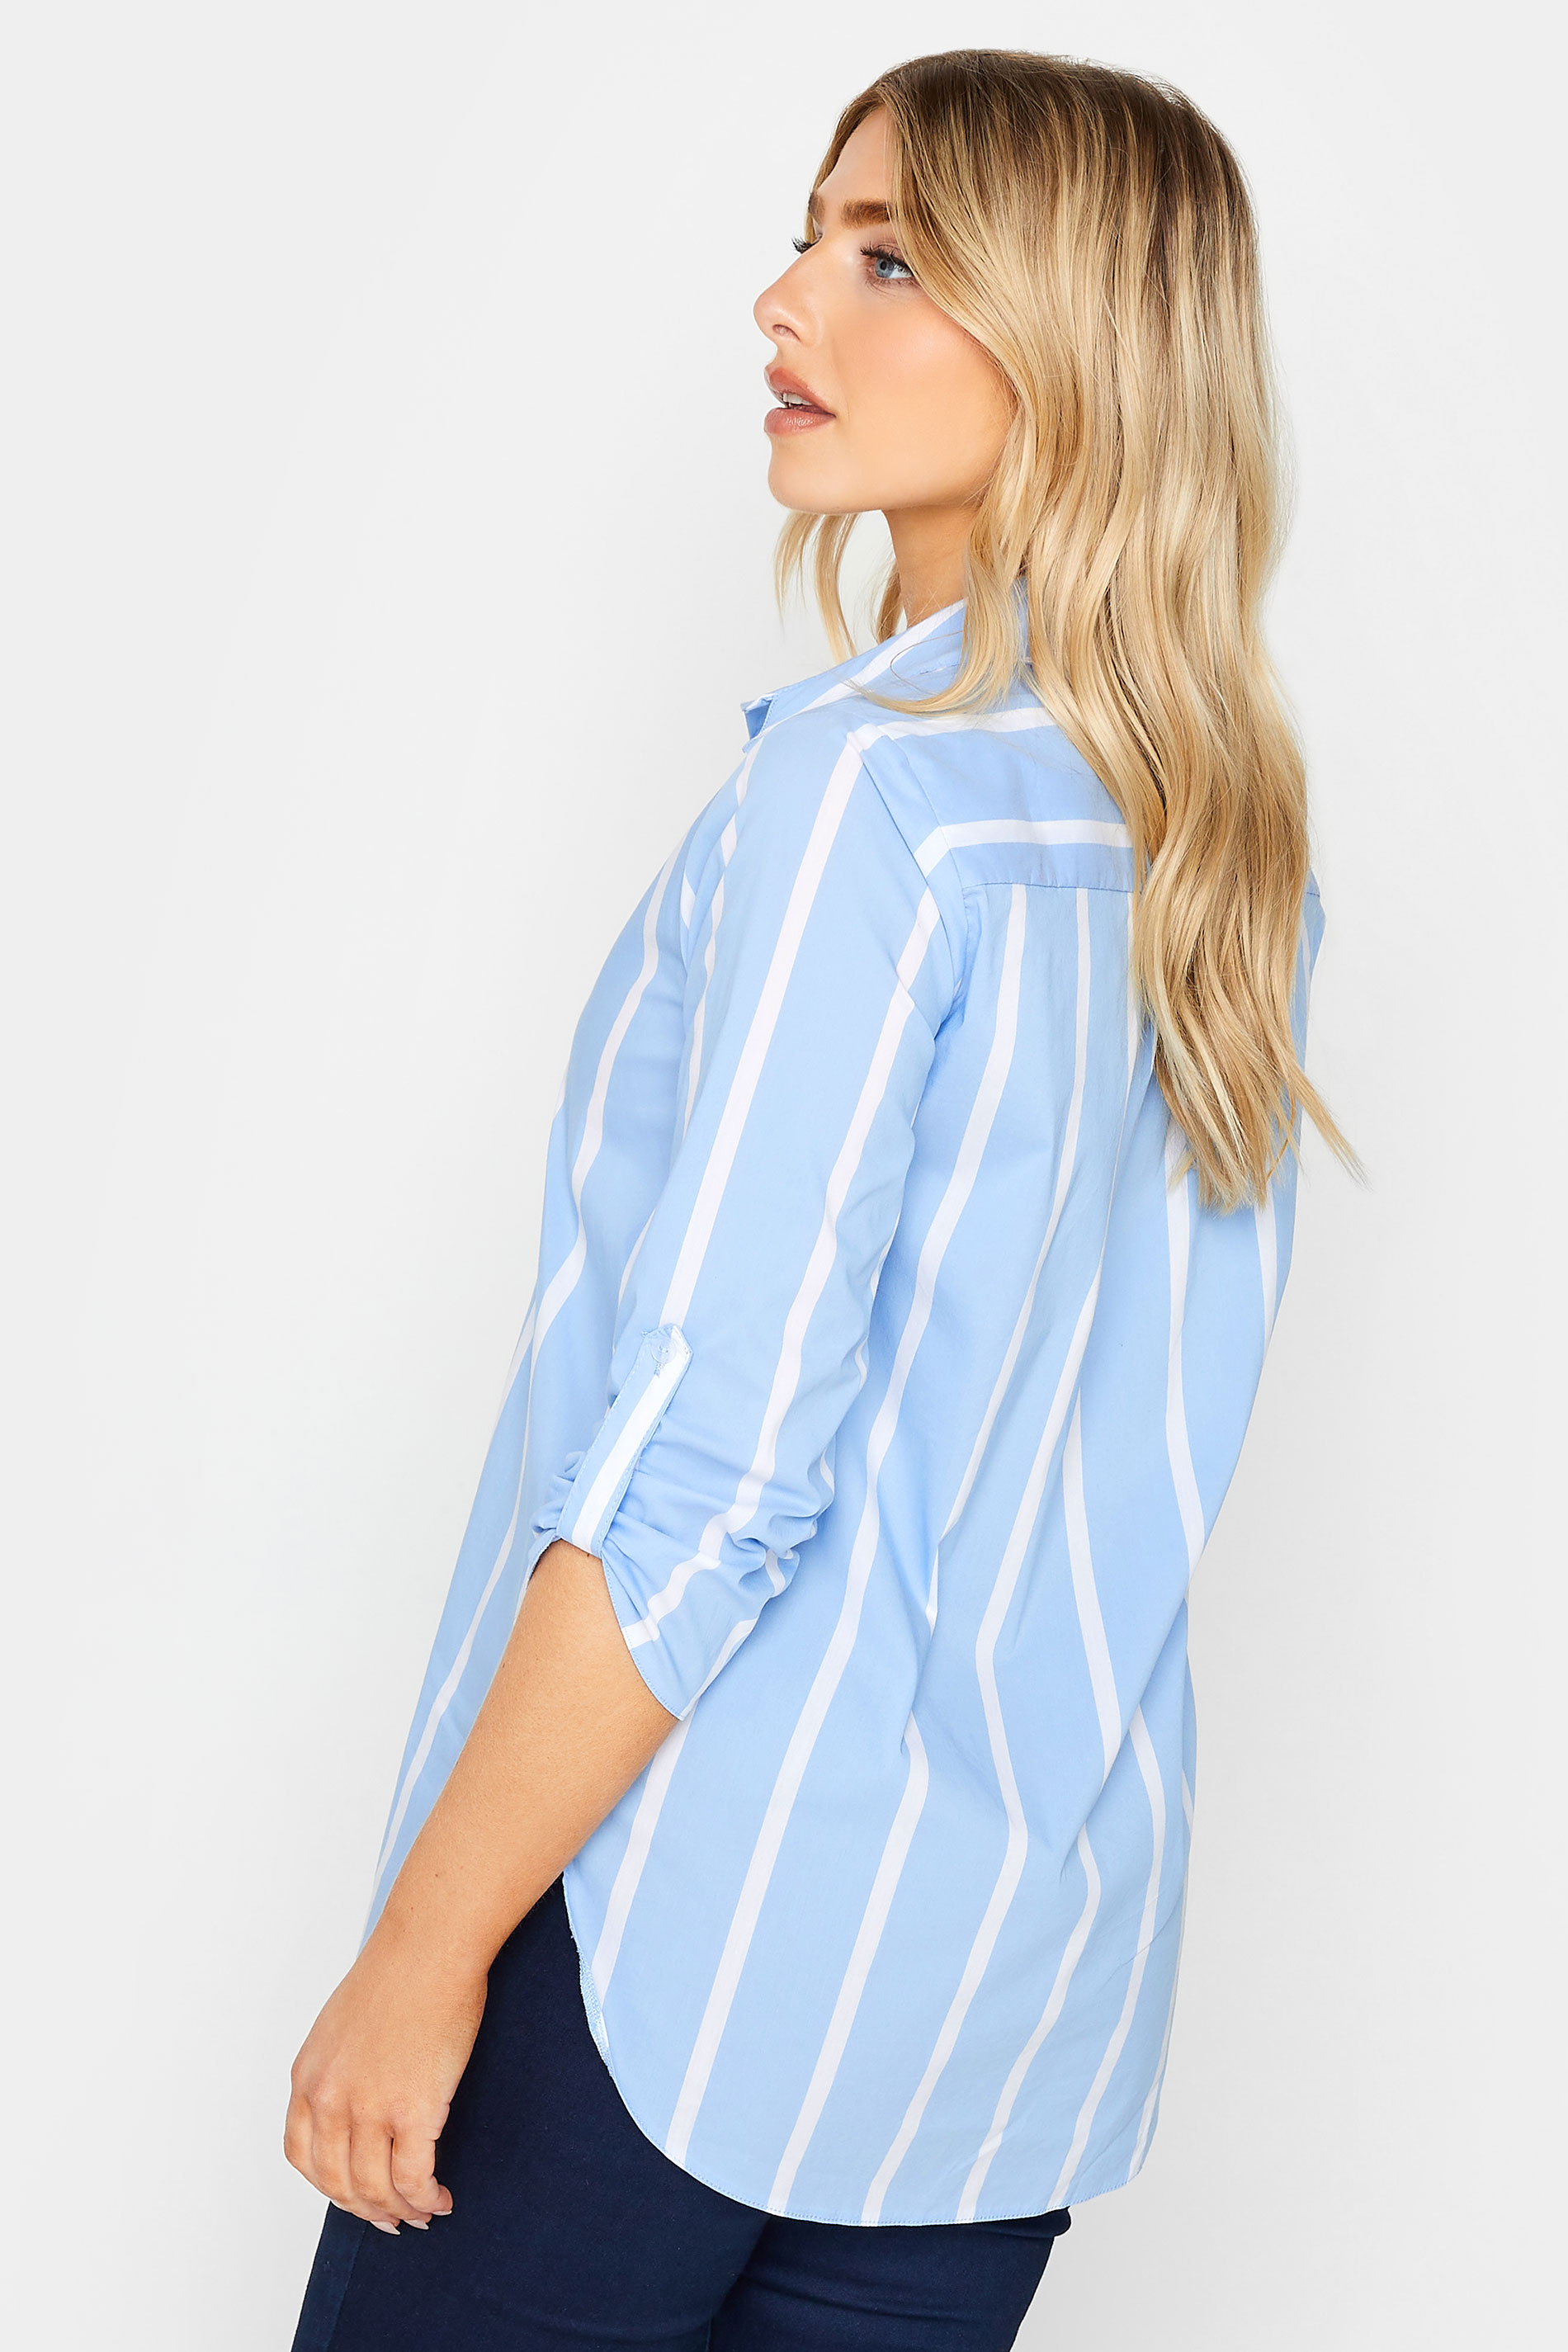 M&Co Blue Stripe Tab Sleeve Detail Shirt | M&Co 3